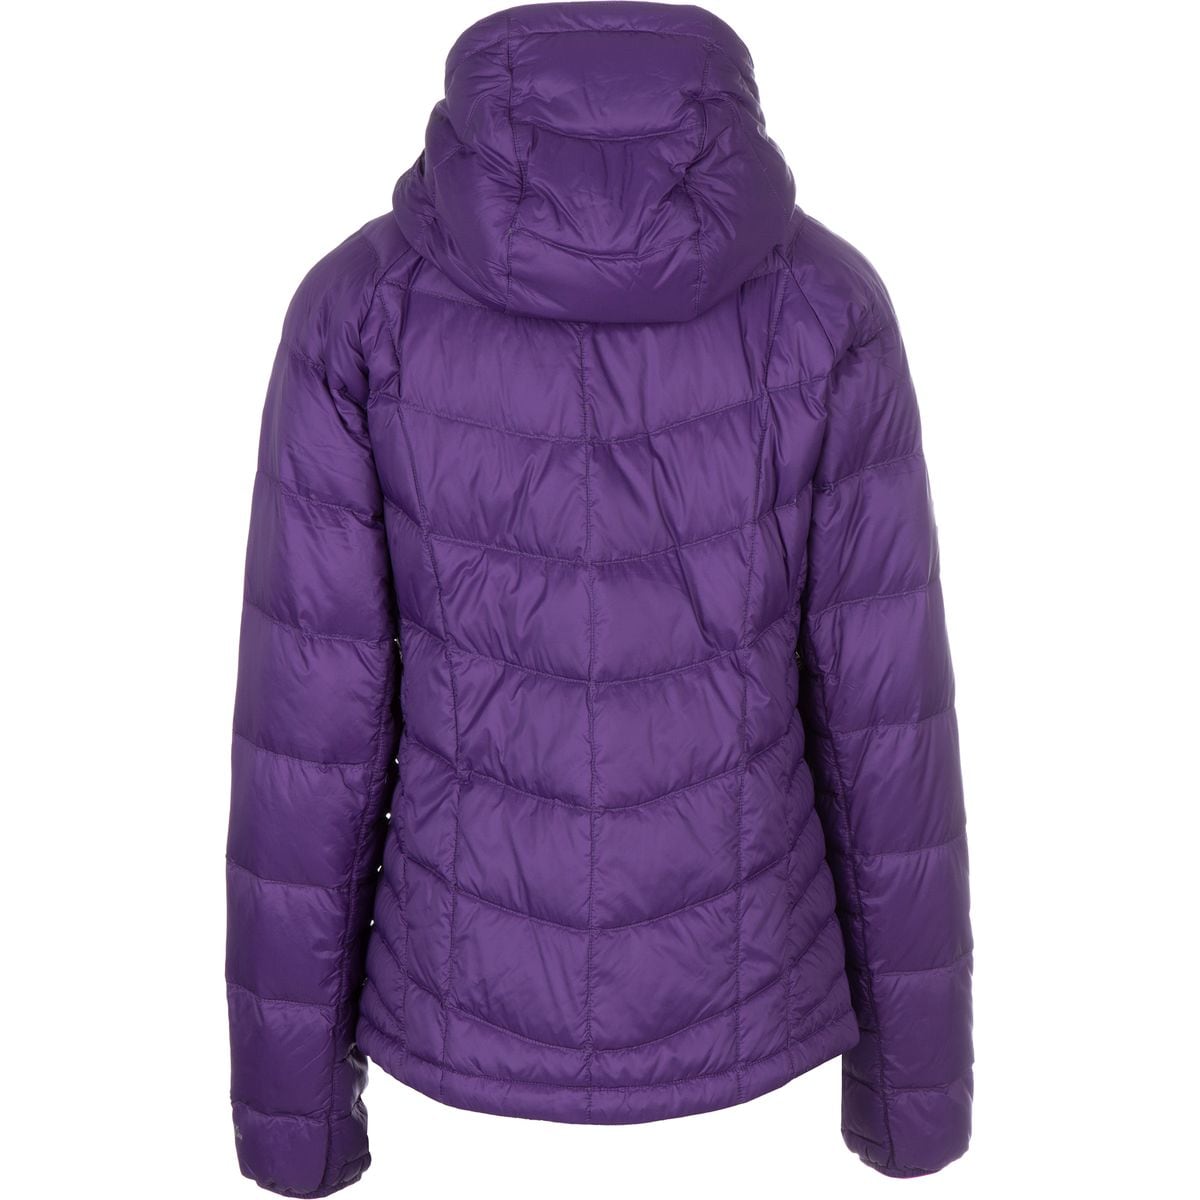 Outdoor Research Sonata Down Hooded Jacket - Women's | eBay